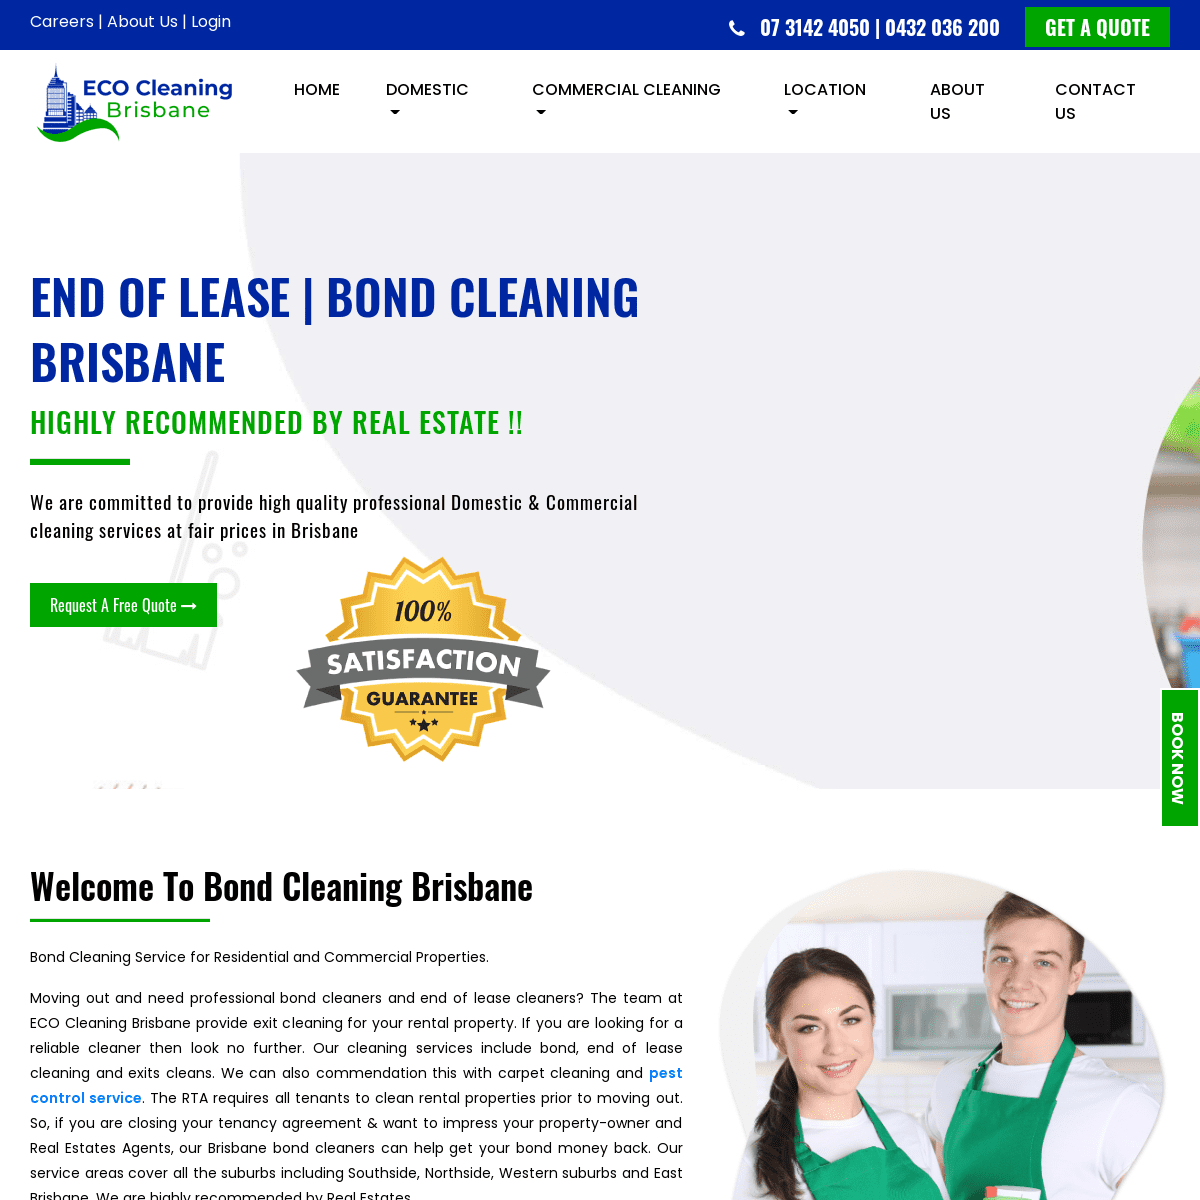 A complete backup of https://ecocleaningbrisbane.com.au